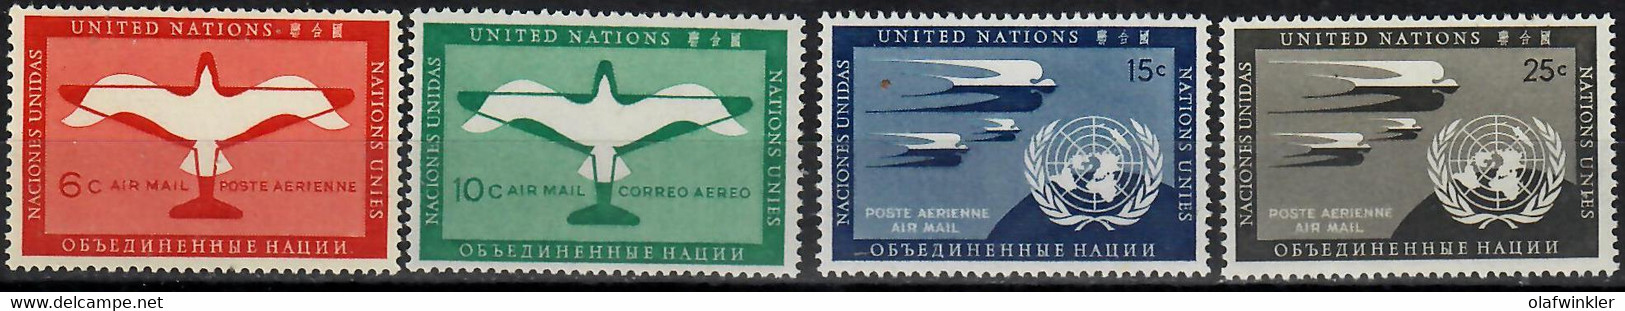 1951 Air Mail Sc C1-4 / YT A 1-4 / Mi 12-15 MNH / Neuf Sans Charniere / Postfrisch [zro] - Poste Aérienne